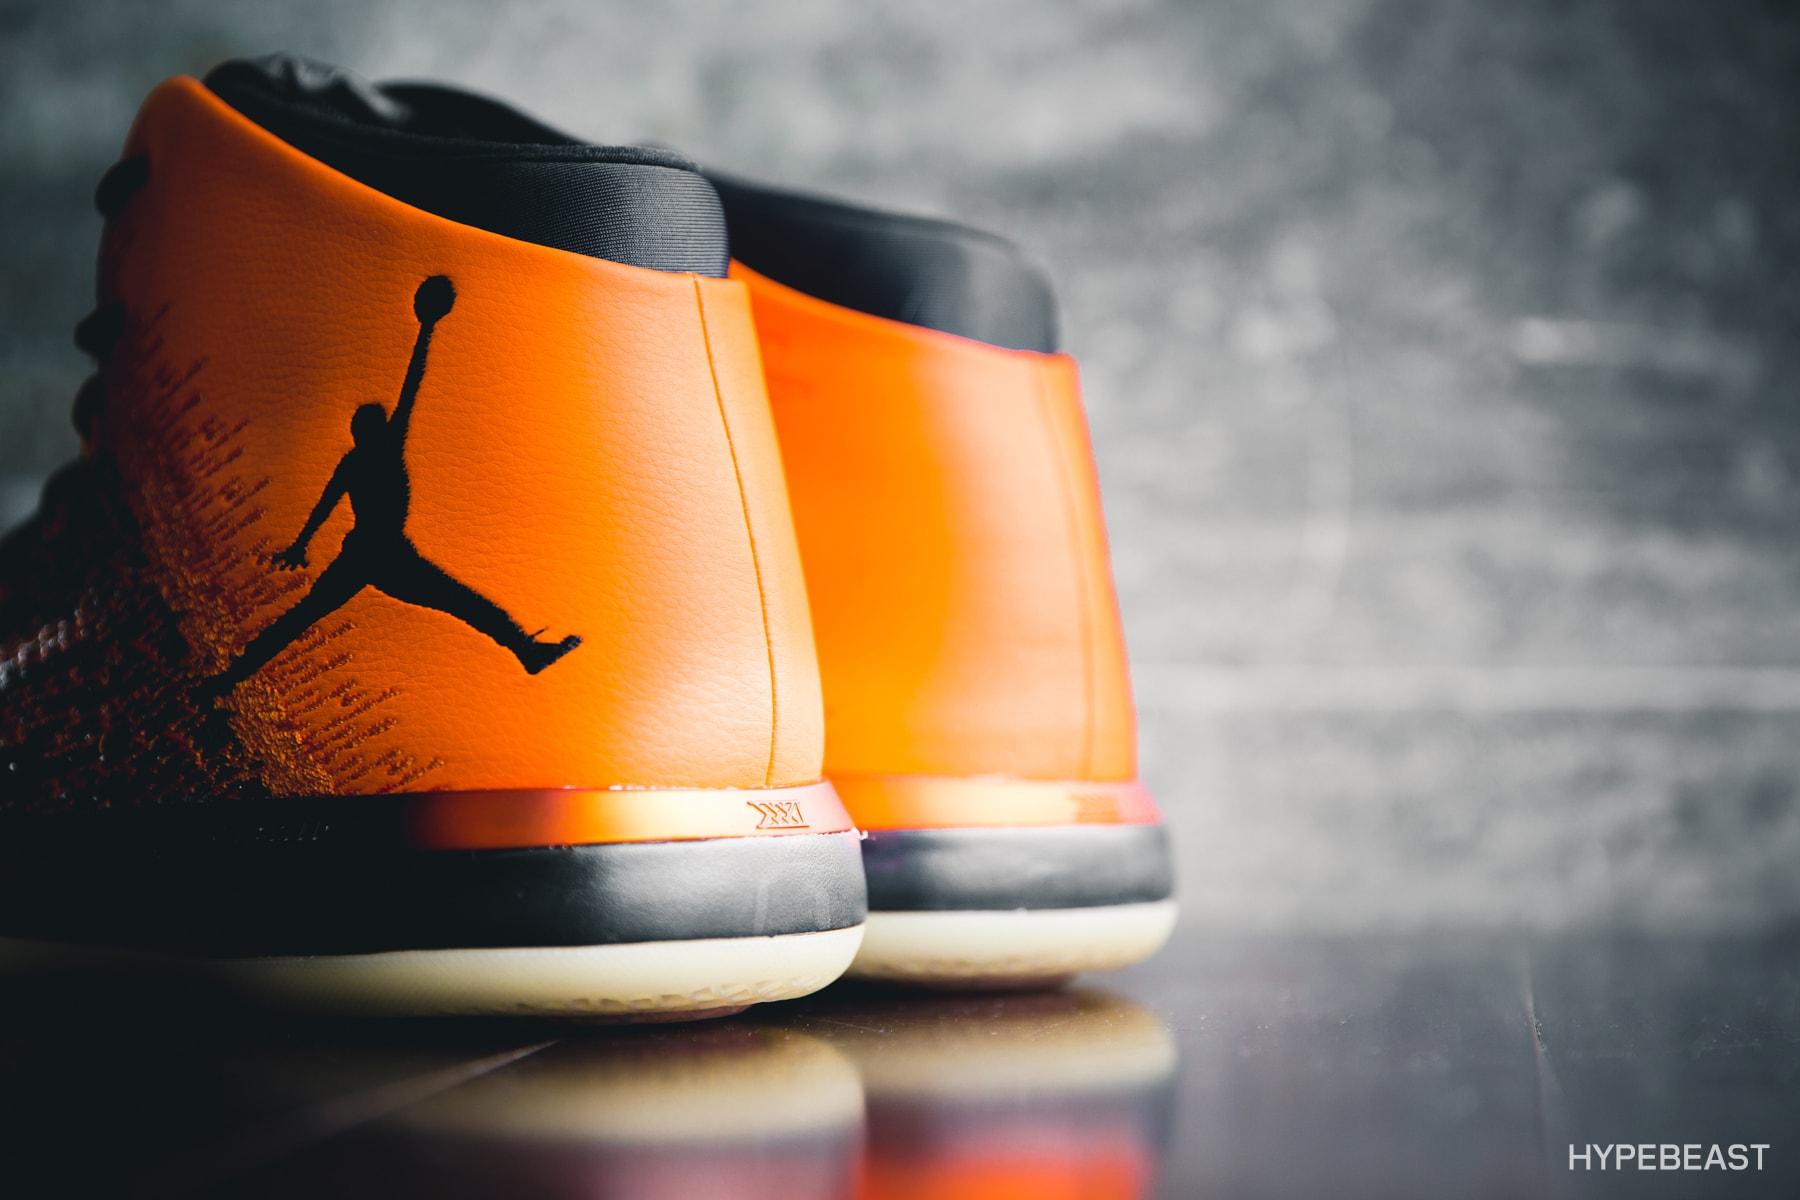 Air Jordan XXXI Shattered Backboard Closer Look Nike Michael Jordan Brand Hi top Hypebeast black orange gradient flyweave basketball